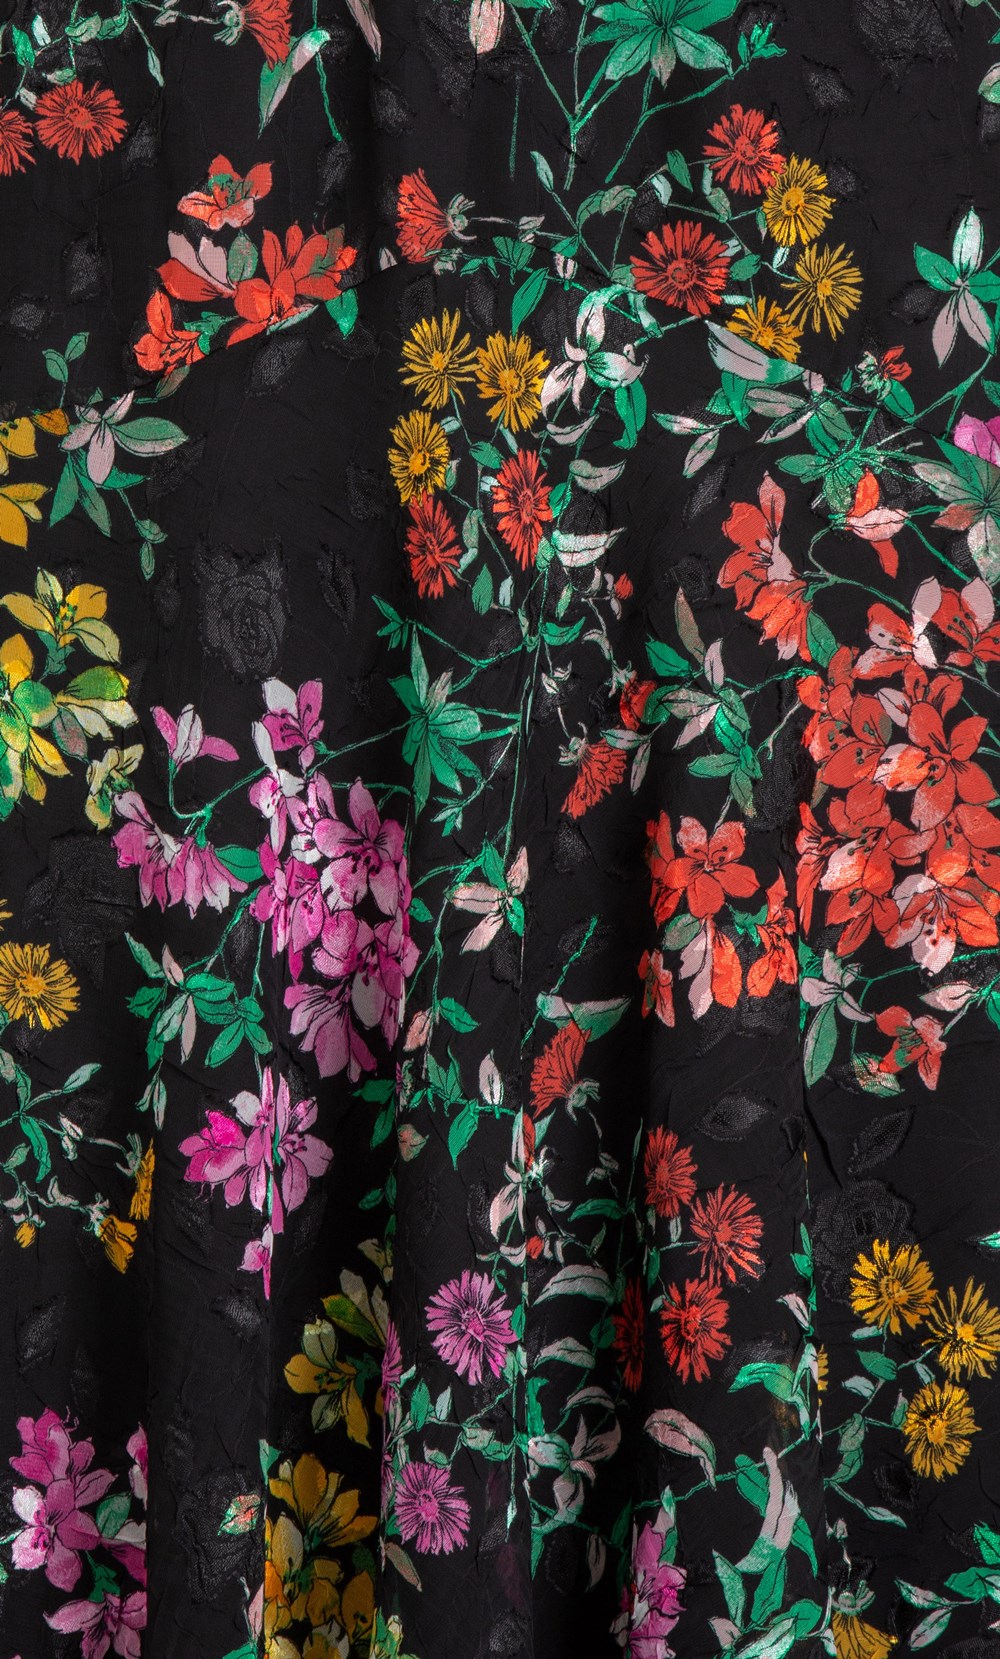 Anna Rose Floral Print Bias Cut Midi Skirt